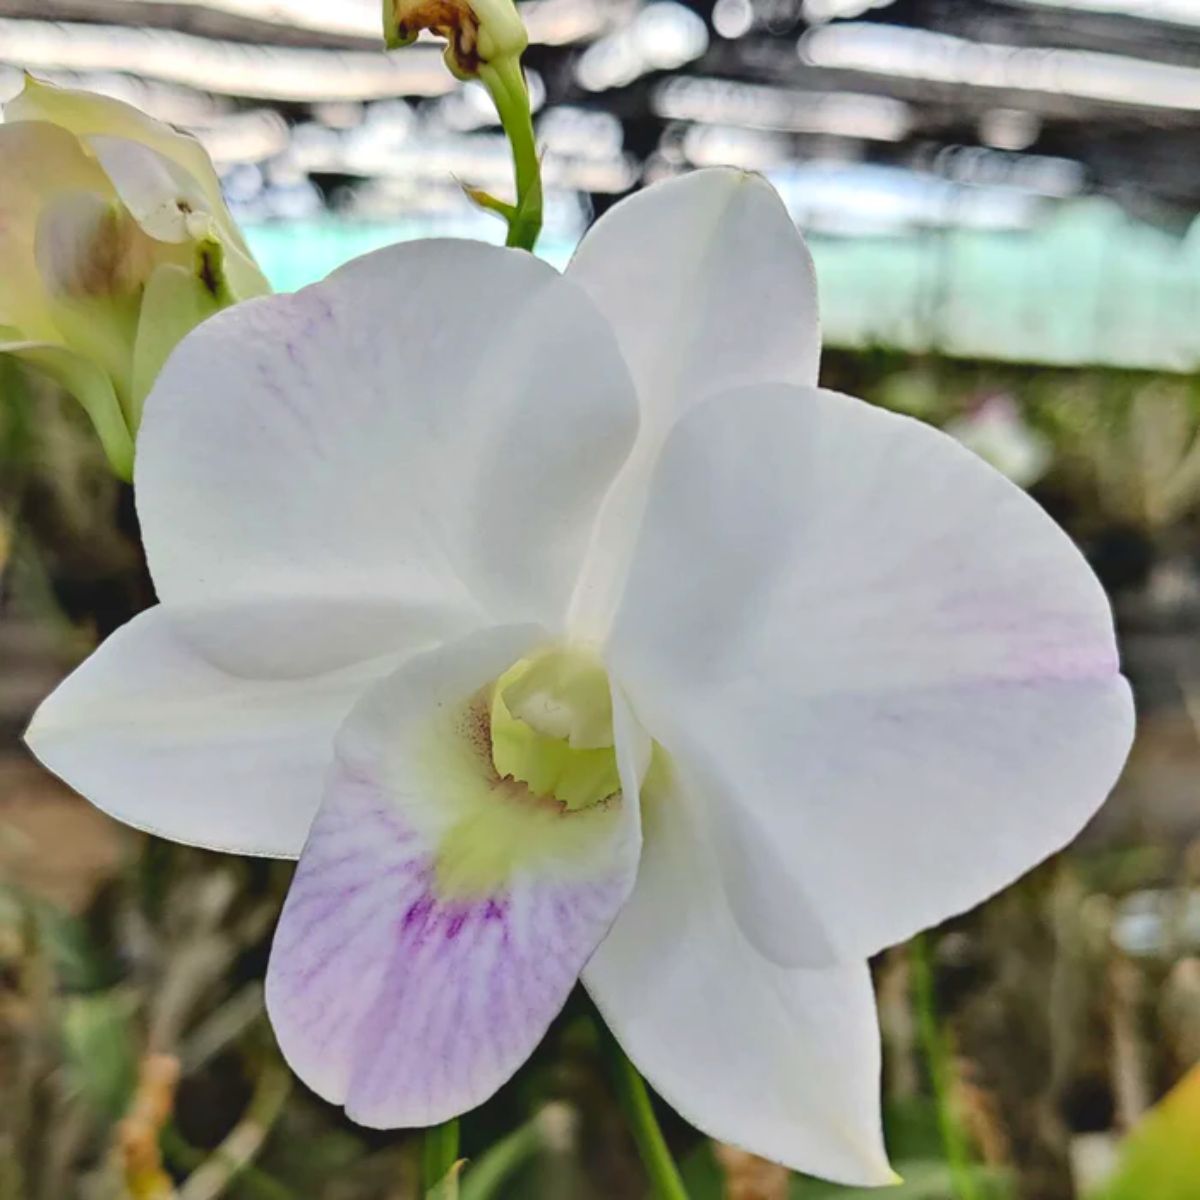 Dendrobium Sonia White Orchid - Pristine White Petals and Graceful Elegance